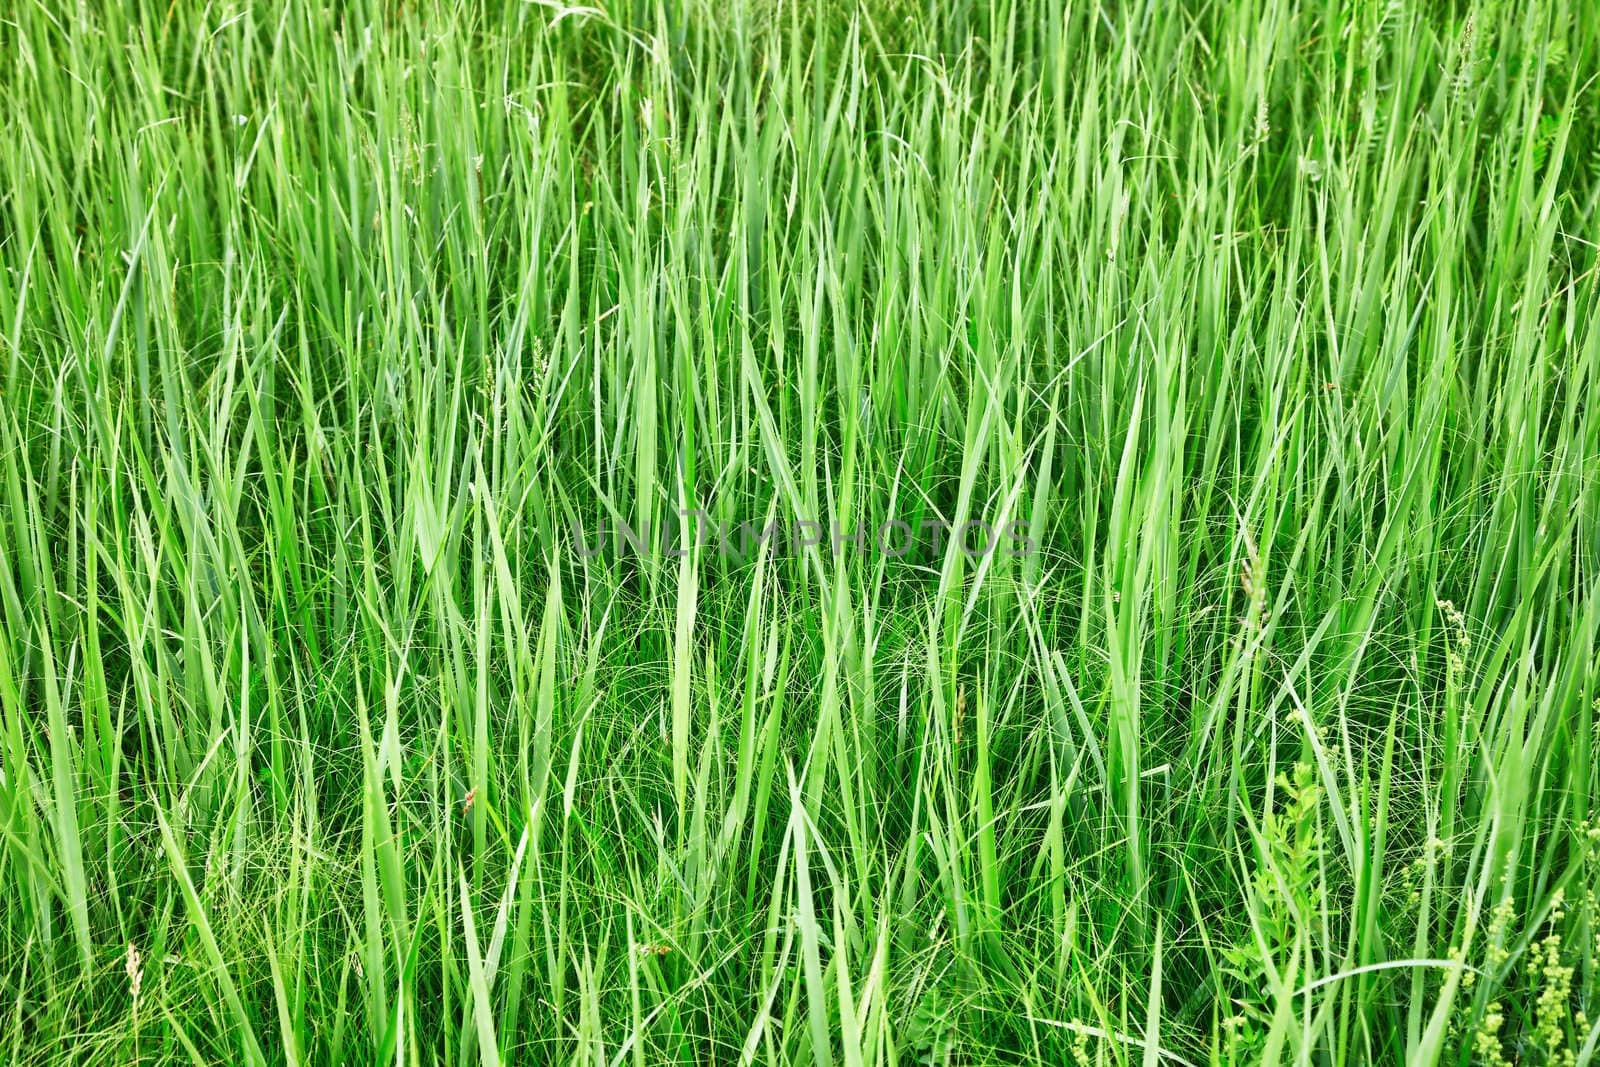 Green tall grass - the natural summer background